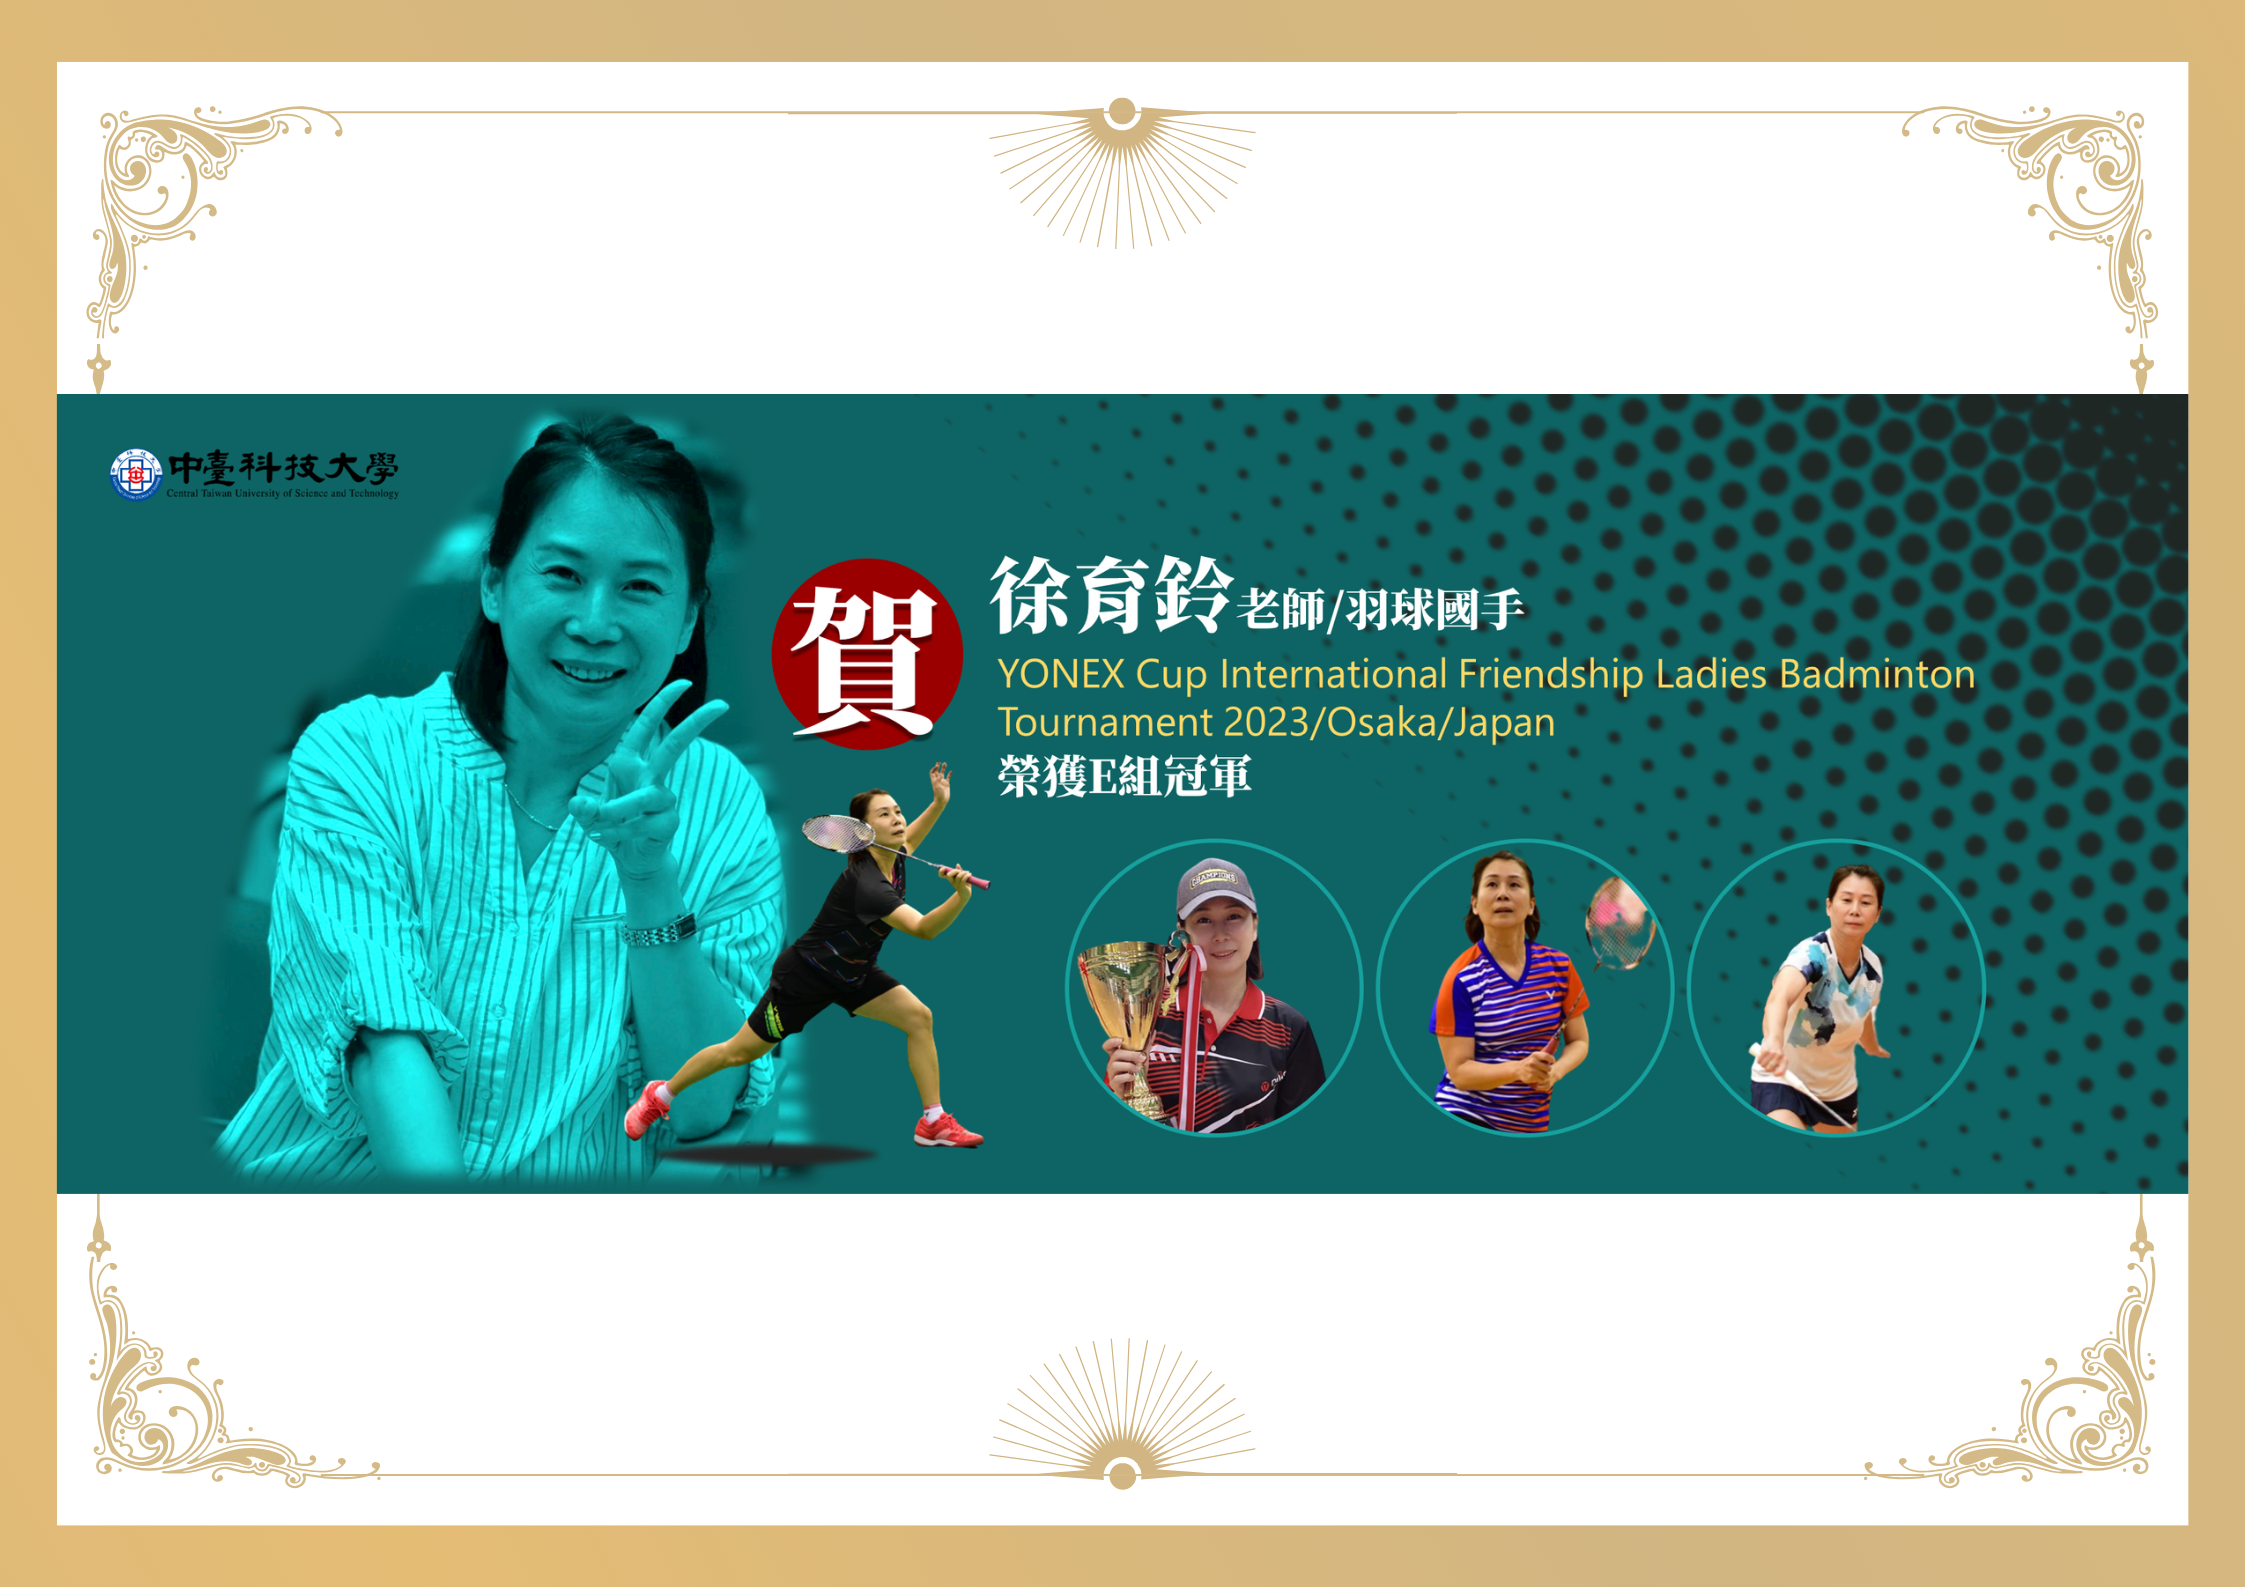 YONEX Cup International Friendship Ladies Badminton Tournament 2023